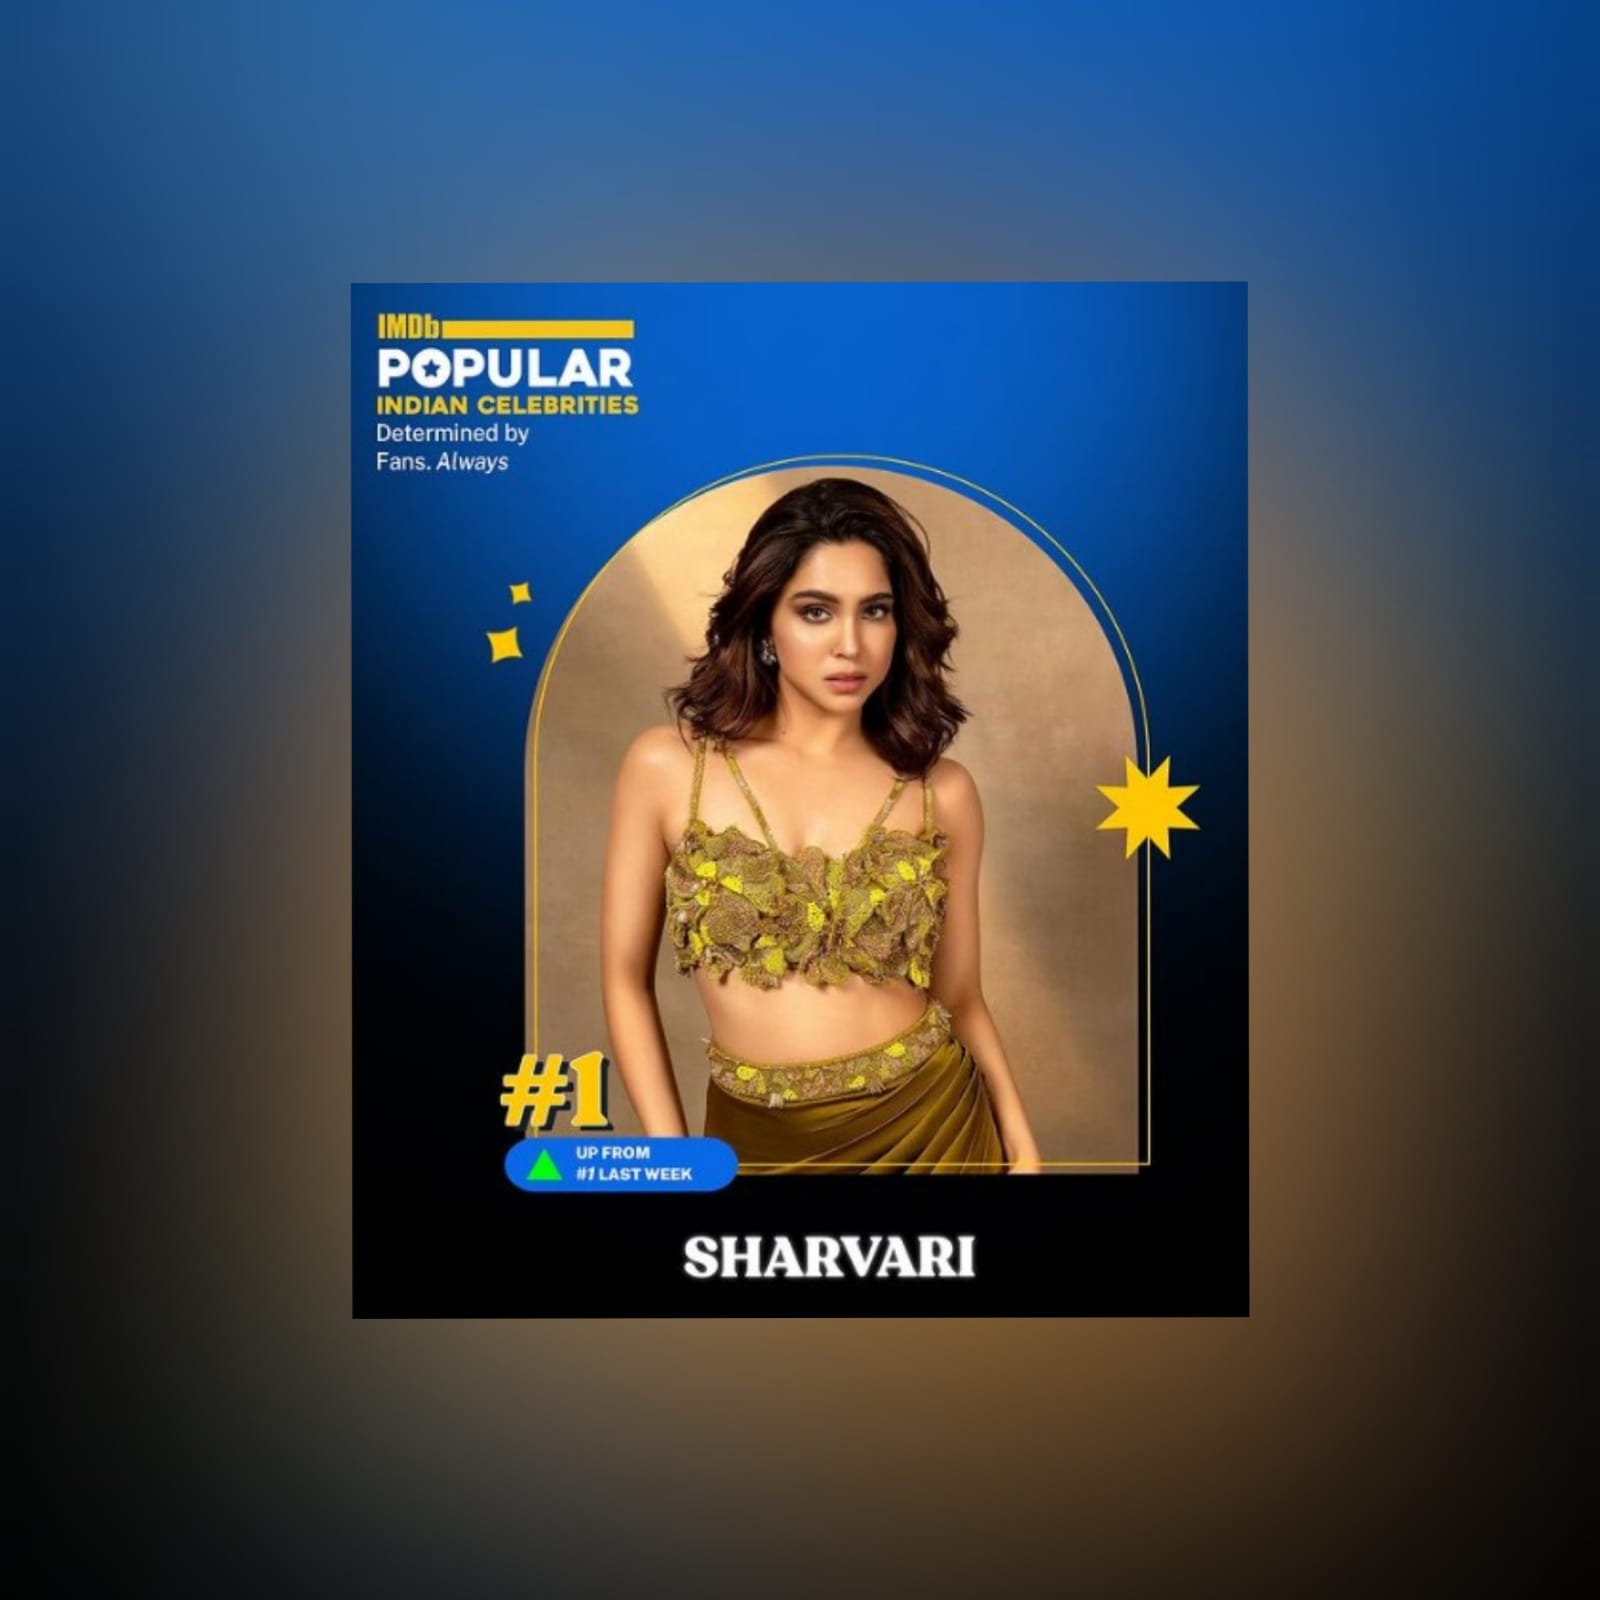 Sharvari Is No.1 On IMDB’s List Of Popular Indian Celebrities